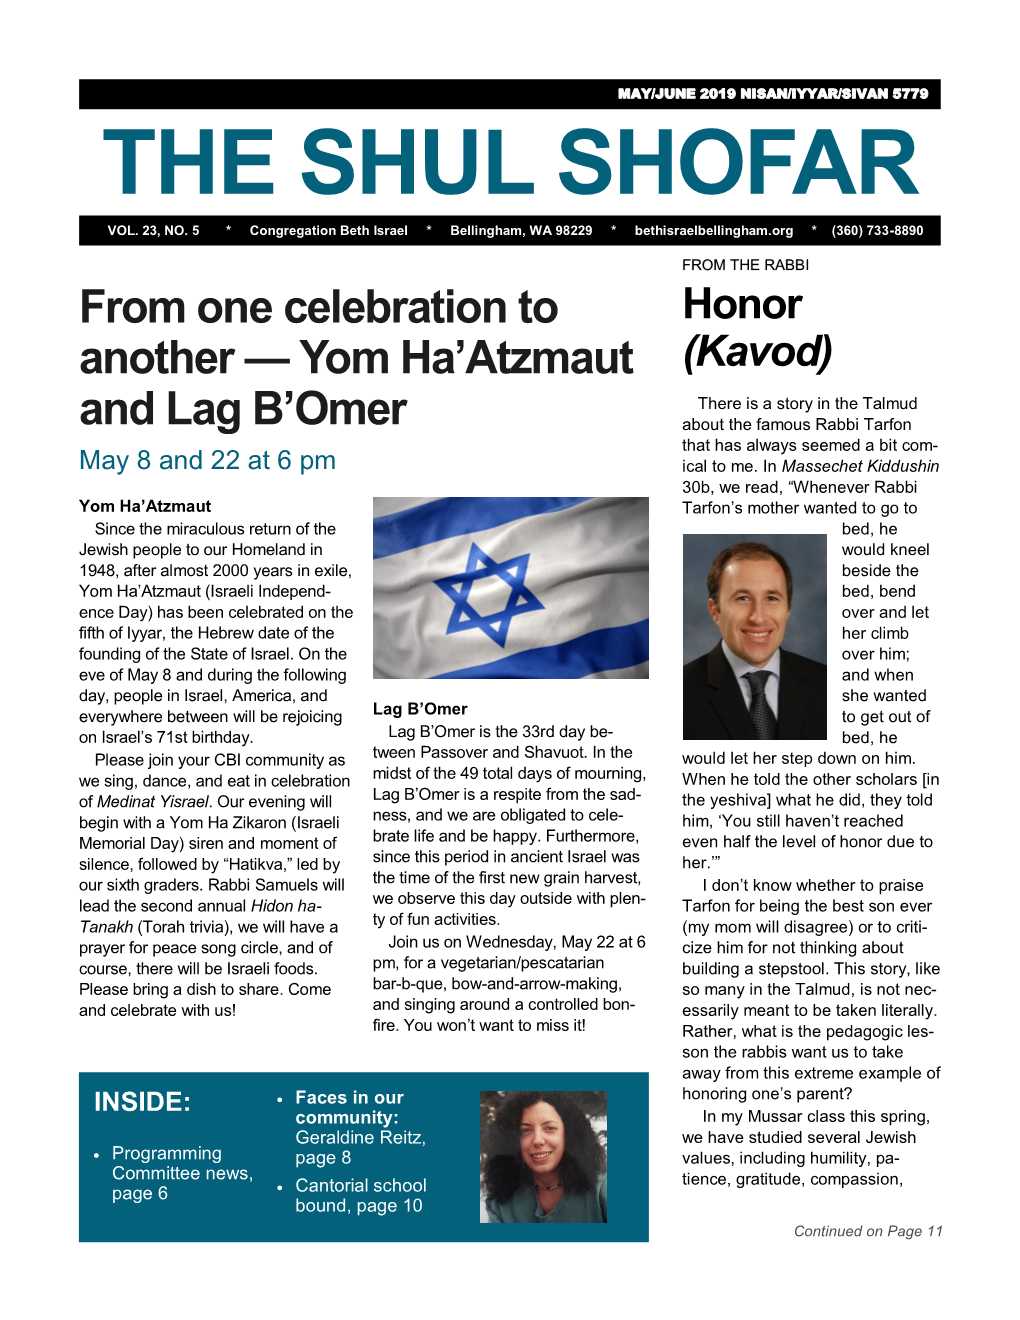 The Shul Shofar, May/June 2019